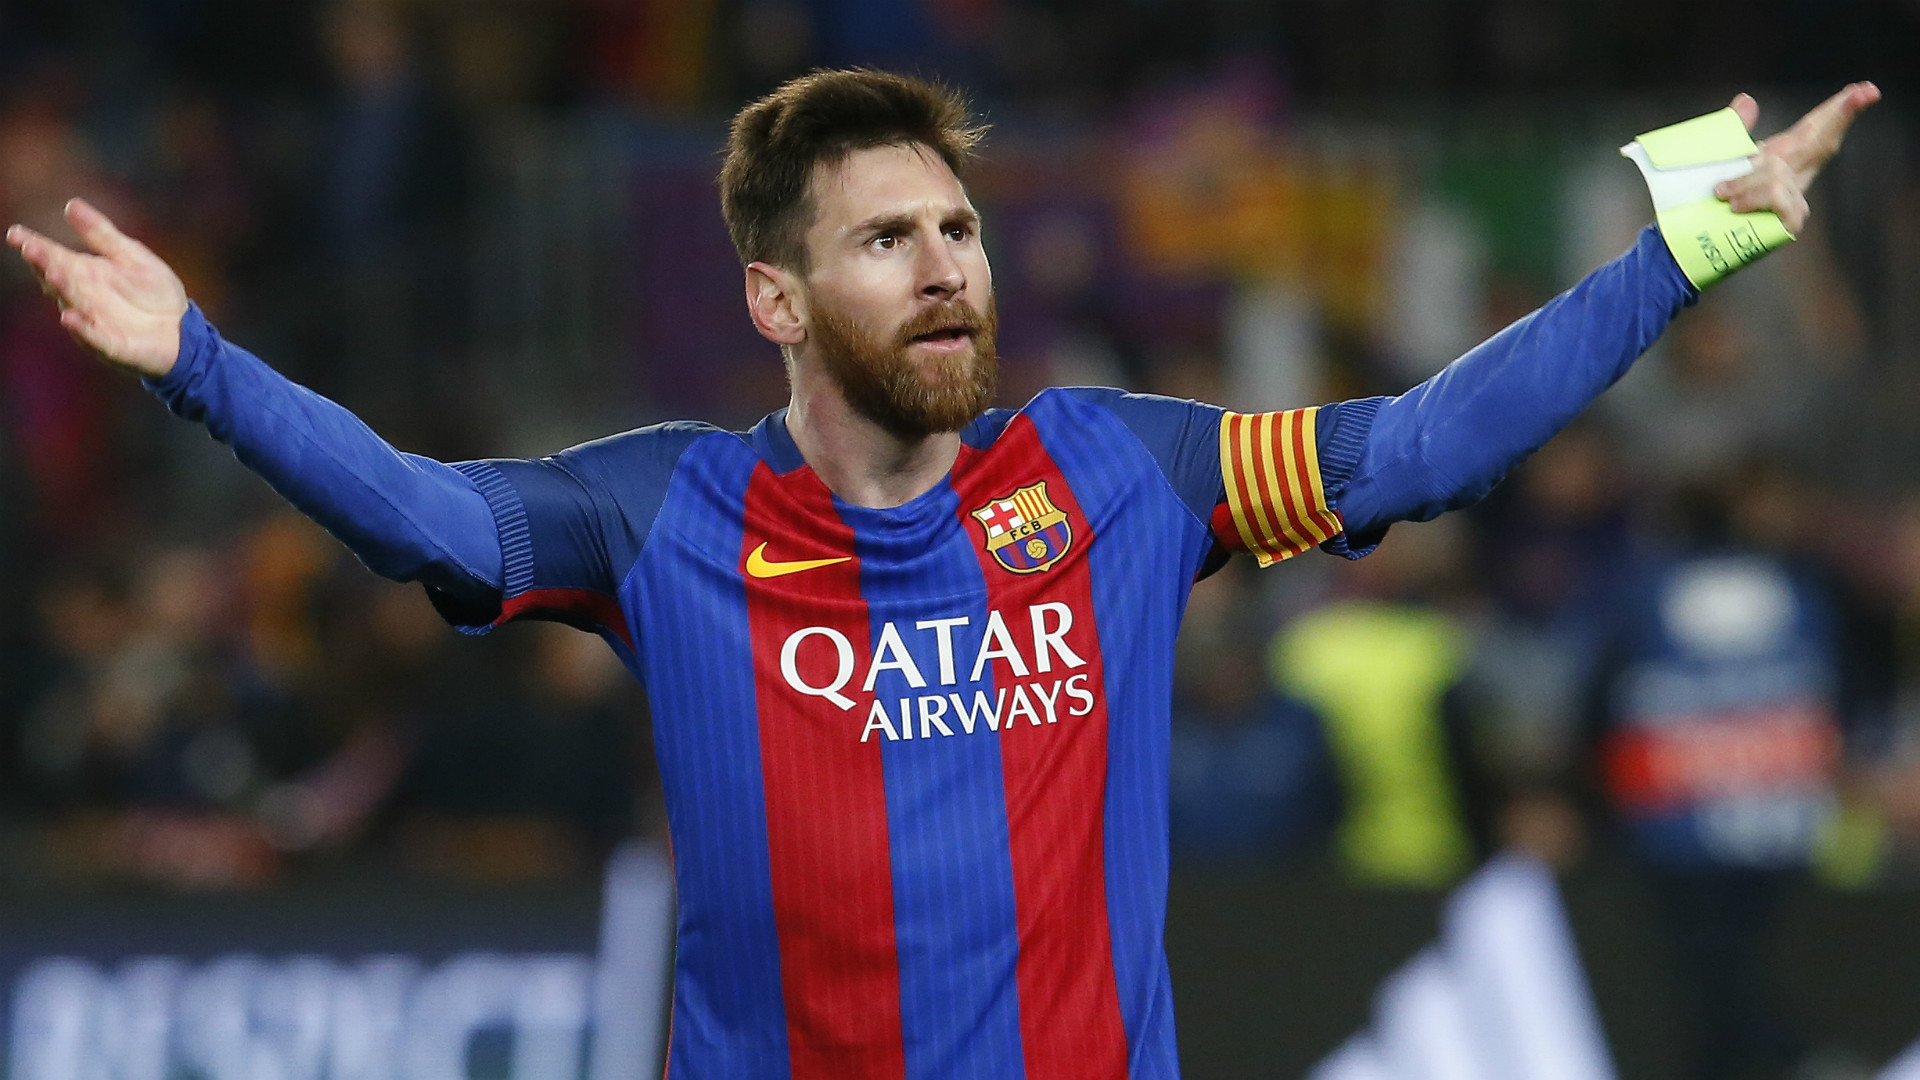 Lionel Messi to stay put at Barcelona - La Liga